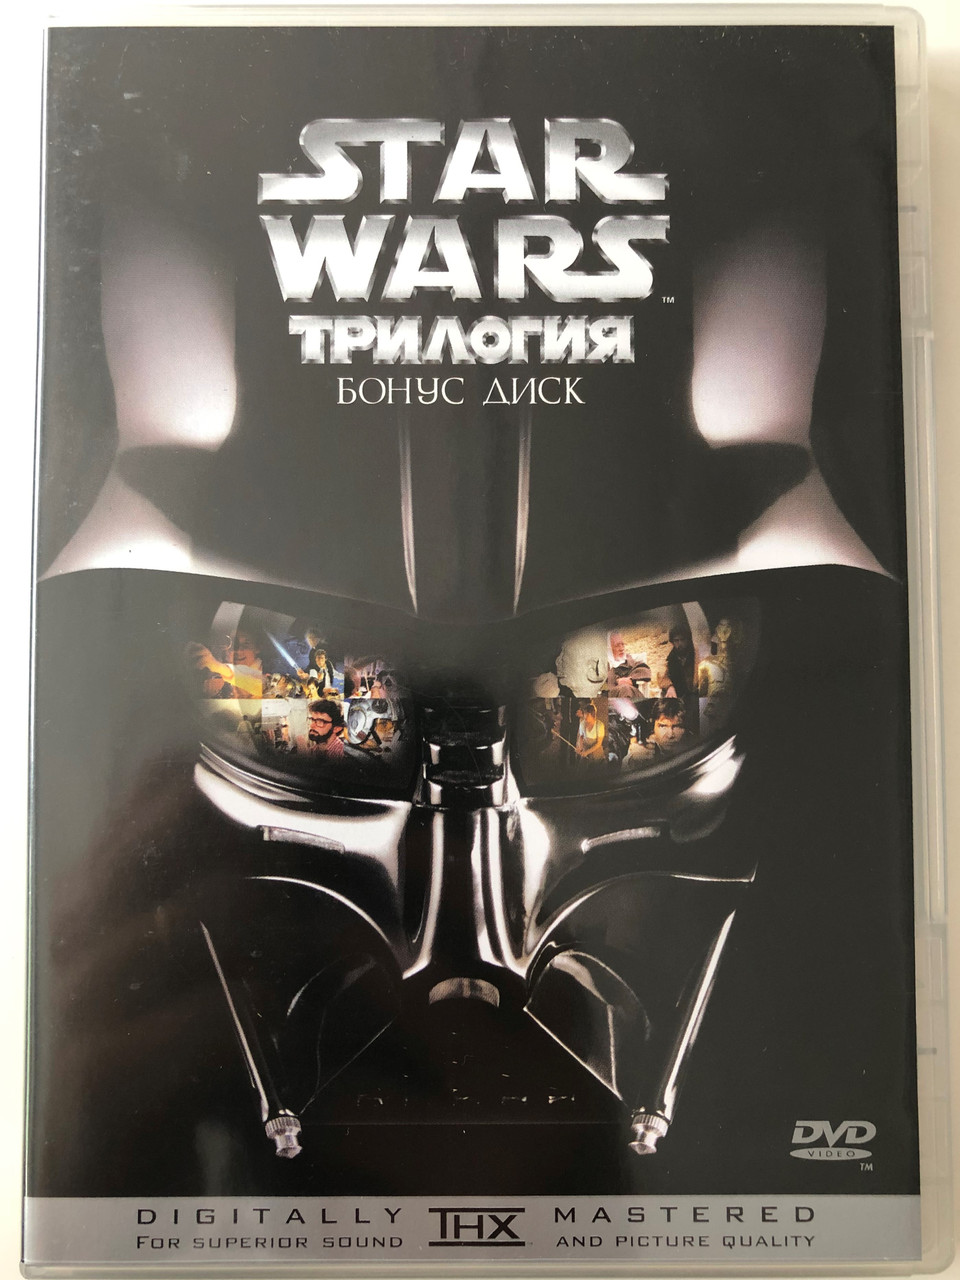 Star Wars Trilogy Bonus DVD 2004 Star Wars Трилогия - бонус диск /  Documentary and Featurettes / Trailers and TV Spots / Video Game demo /  Bulgarian DVD - bibleinmylanguage